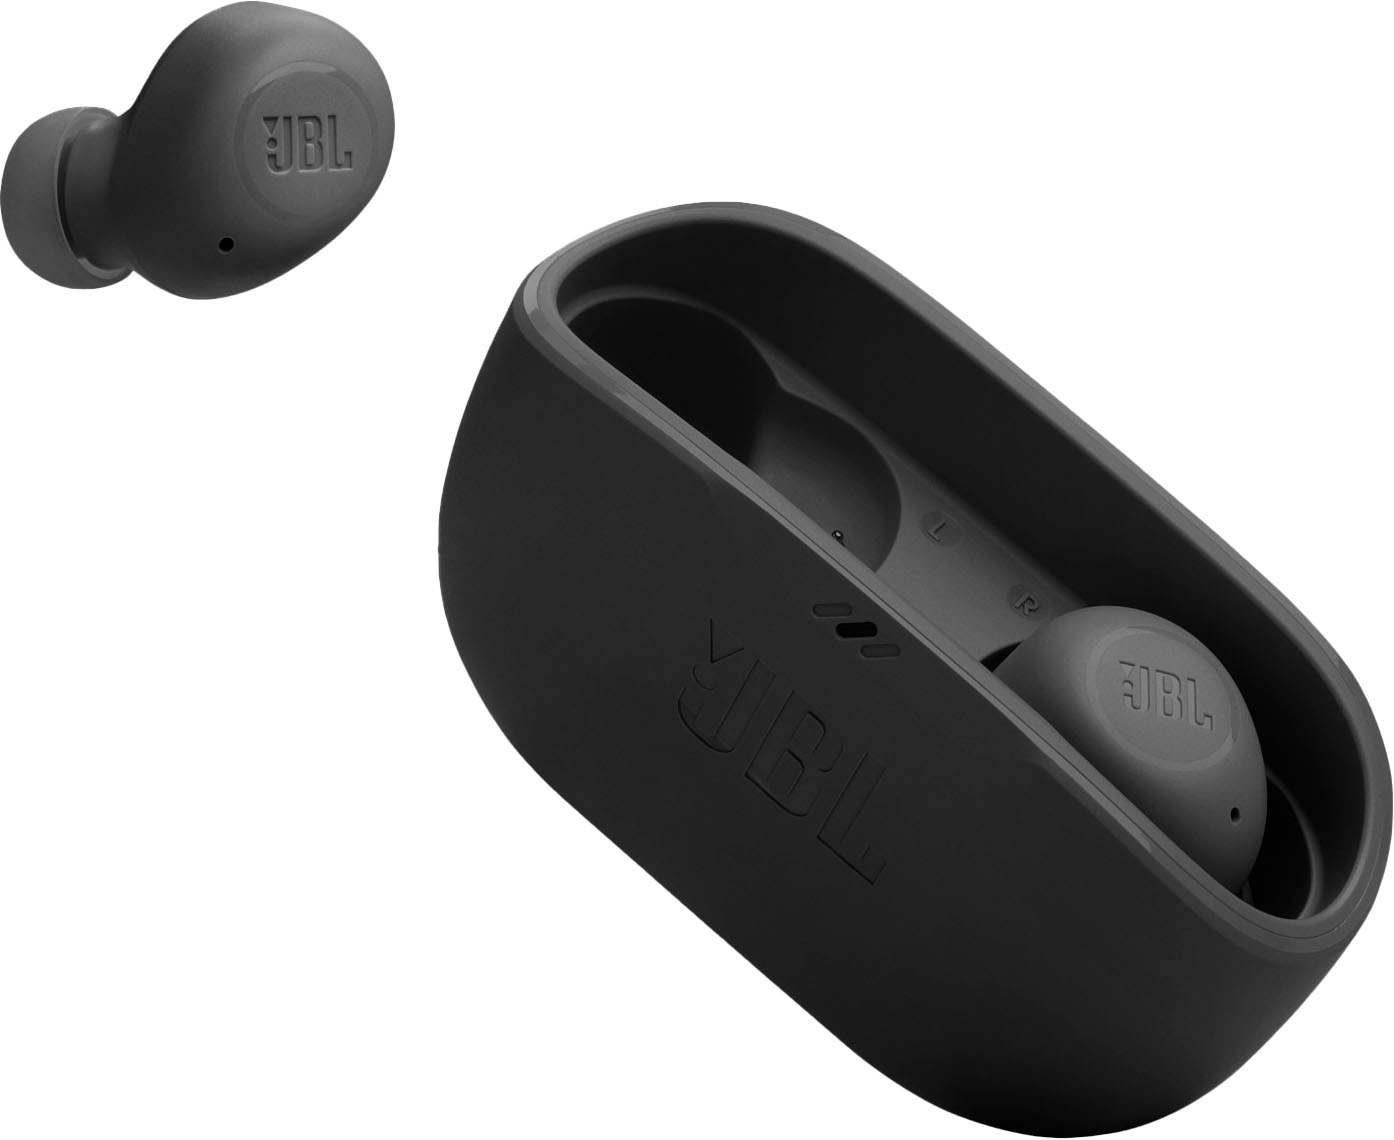 JBL Vibe Buds True Wireless Earbuds Black JBLVBUDSBLKAM - Best Buy